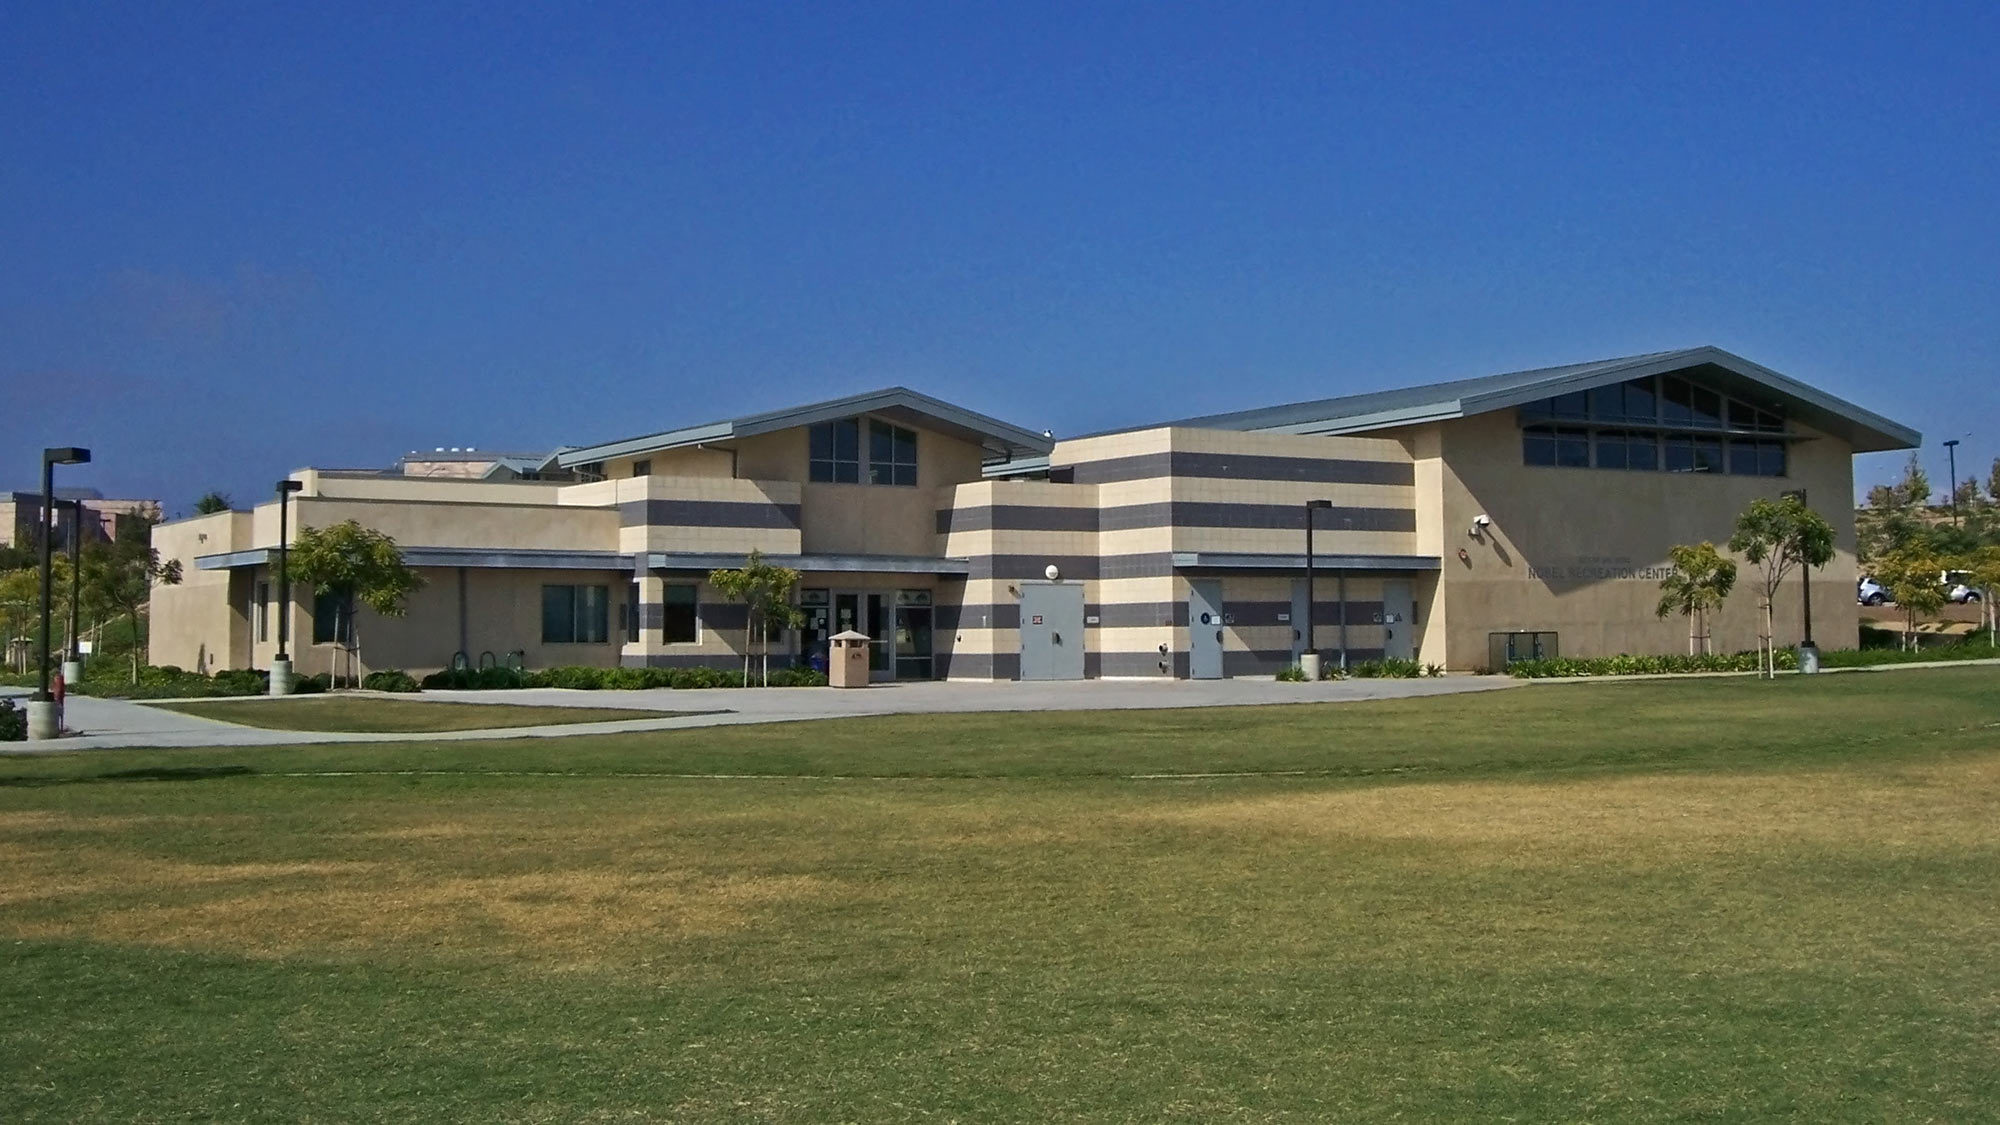 Nobel Library & Athletic Center San Diego, California